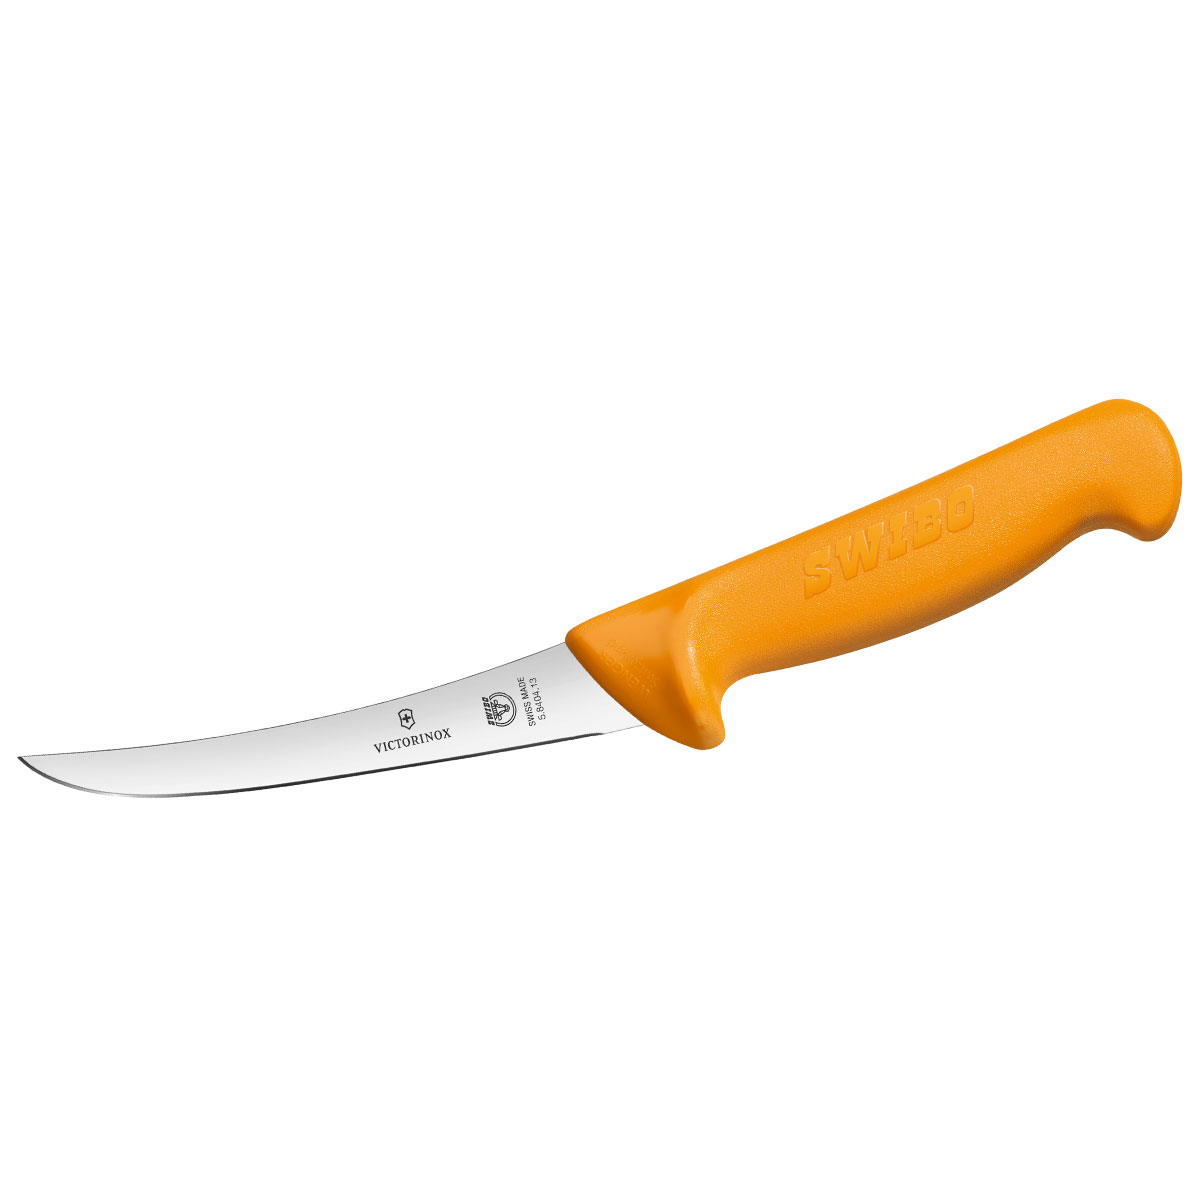 Swibo Boning Knife, 13cm (5) - Curved, Narrow, Semi-Flexible (204-13)